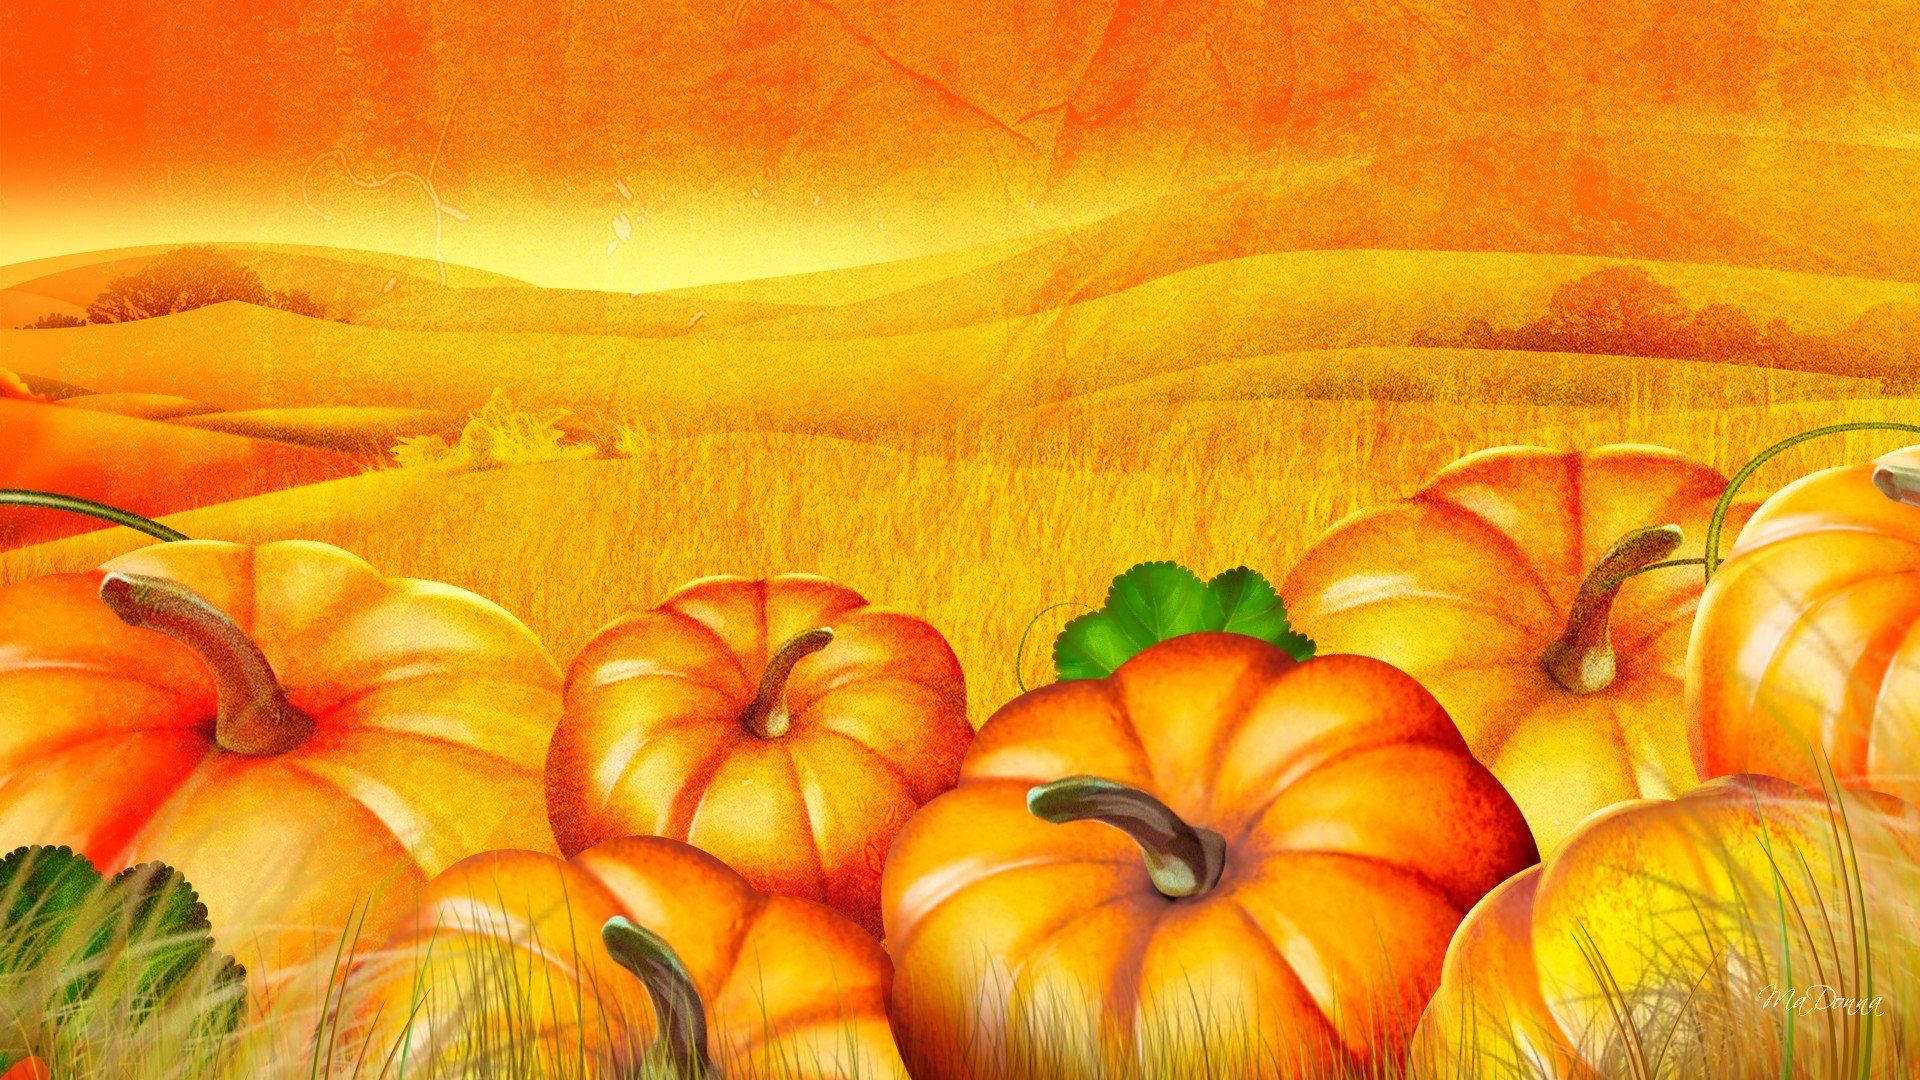 Pumpkin Picking Wallpaper. Apple Picking Wallpaper, Pumpkin Picking Wallpaper And Autumn Apple Picking Wallpaper